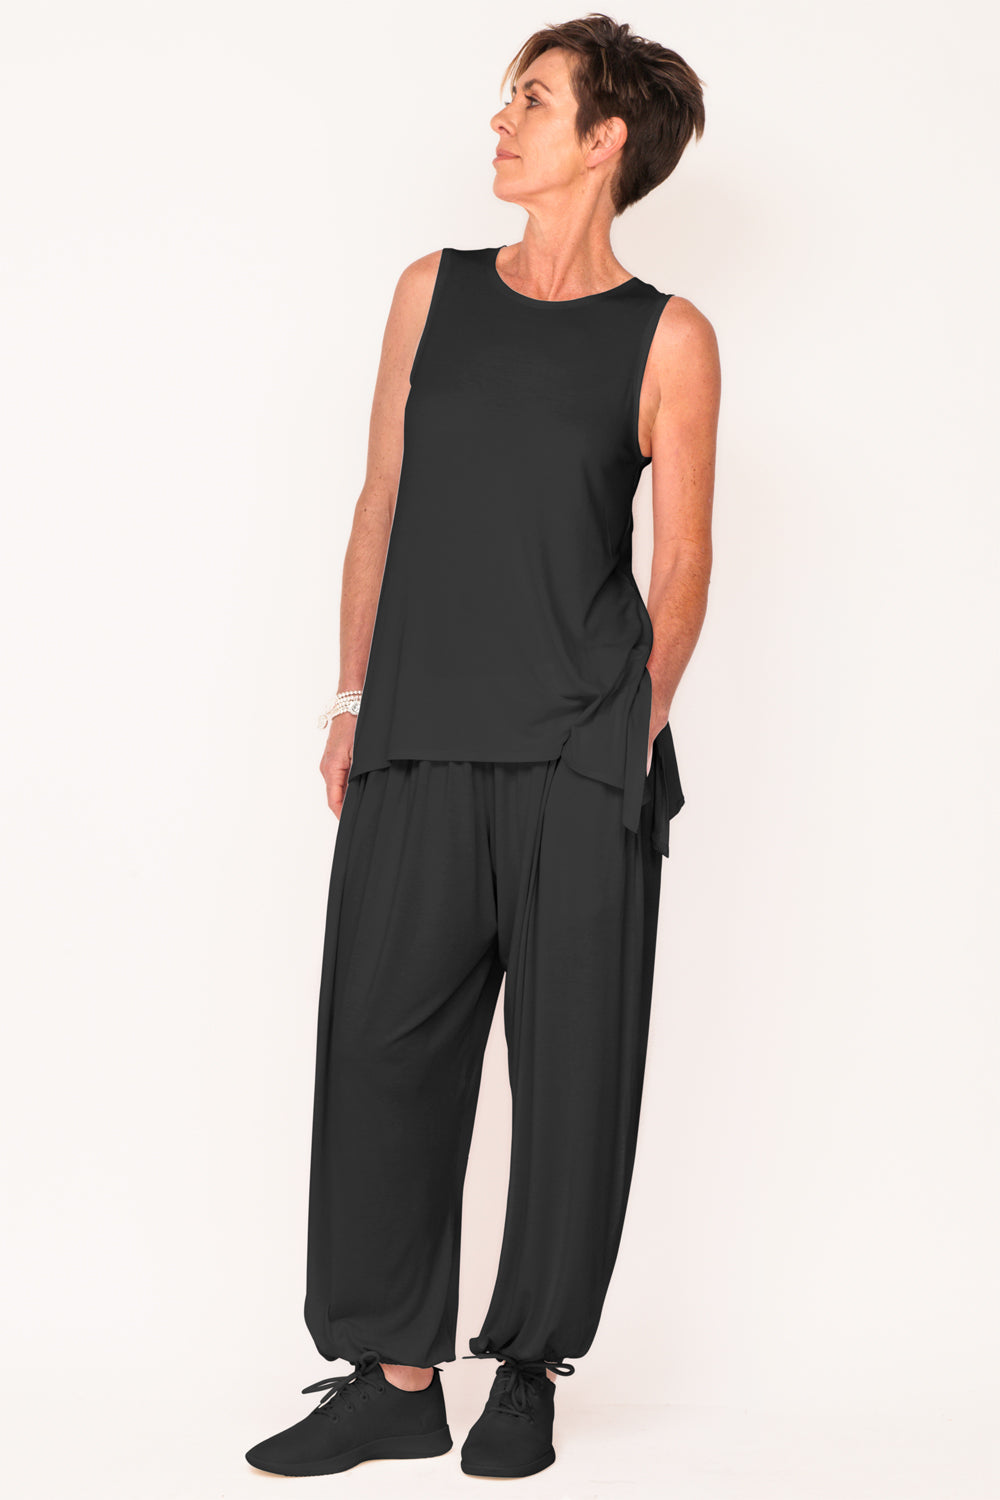 active-wear-sleeveless-tank-ebony-black-edna-pant-travel-wear